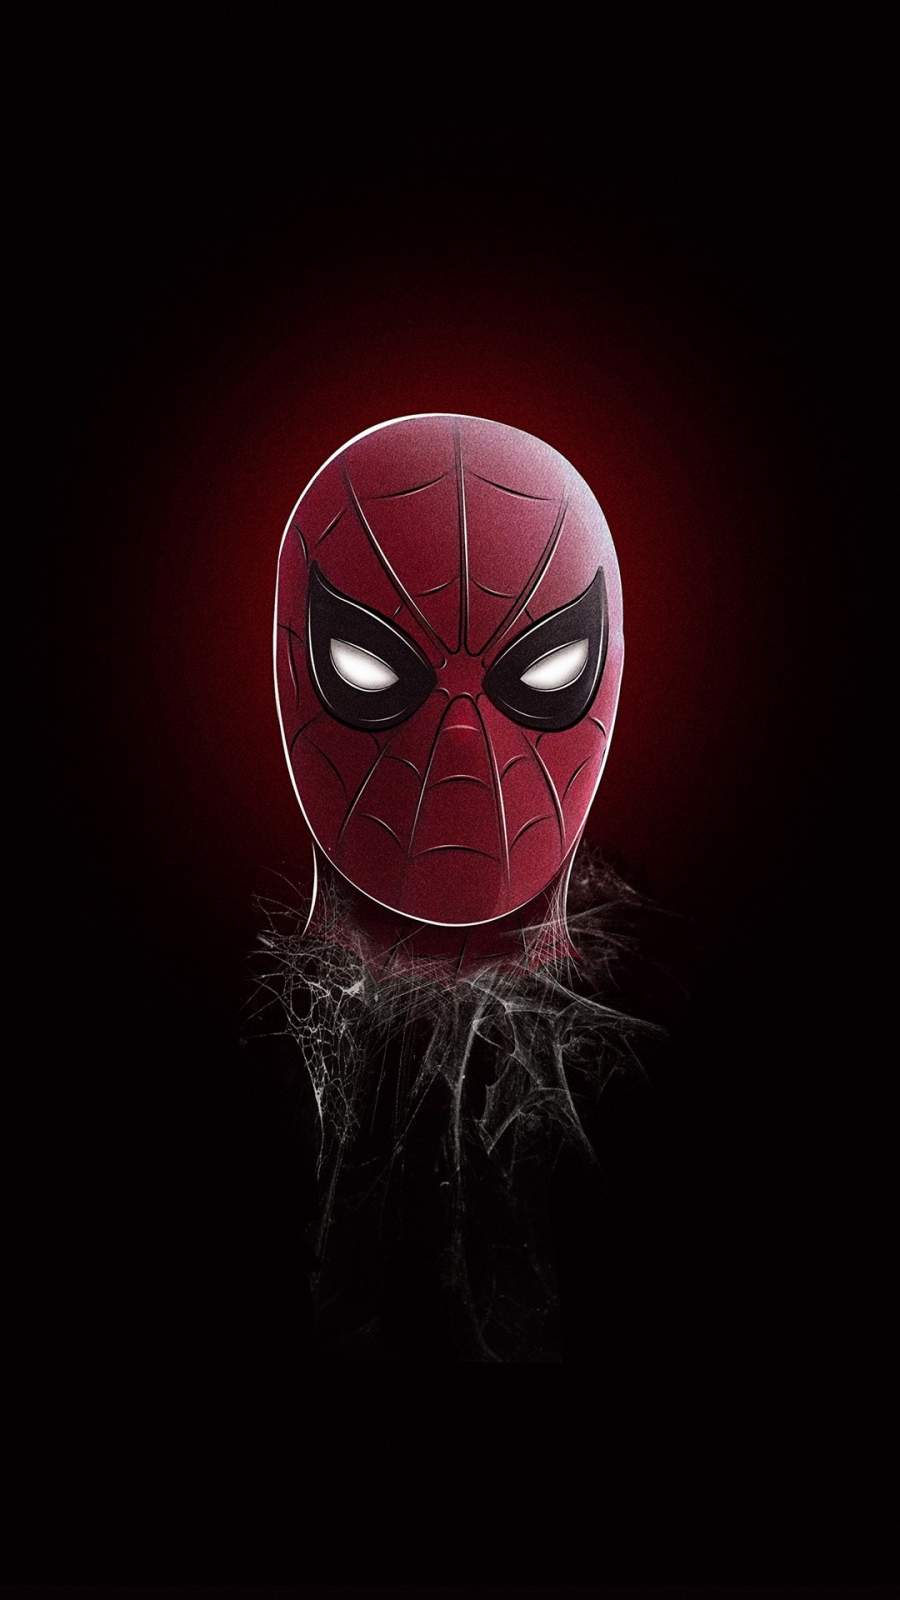 Spiderman Minimal Art IPhone Wallpaper - IPhone Wallpapers : iPhone ...